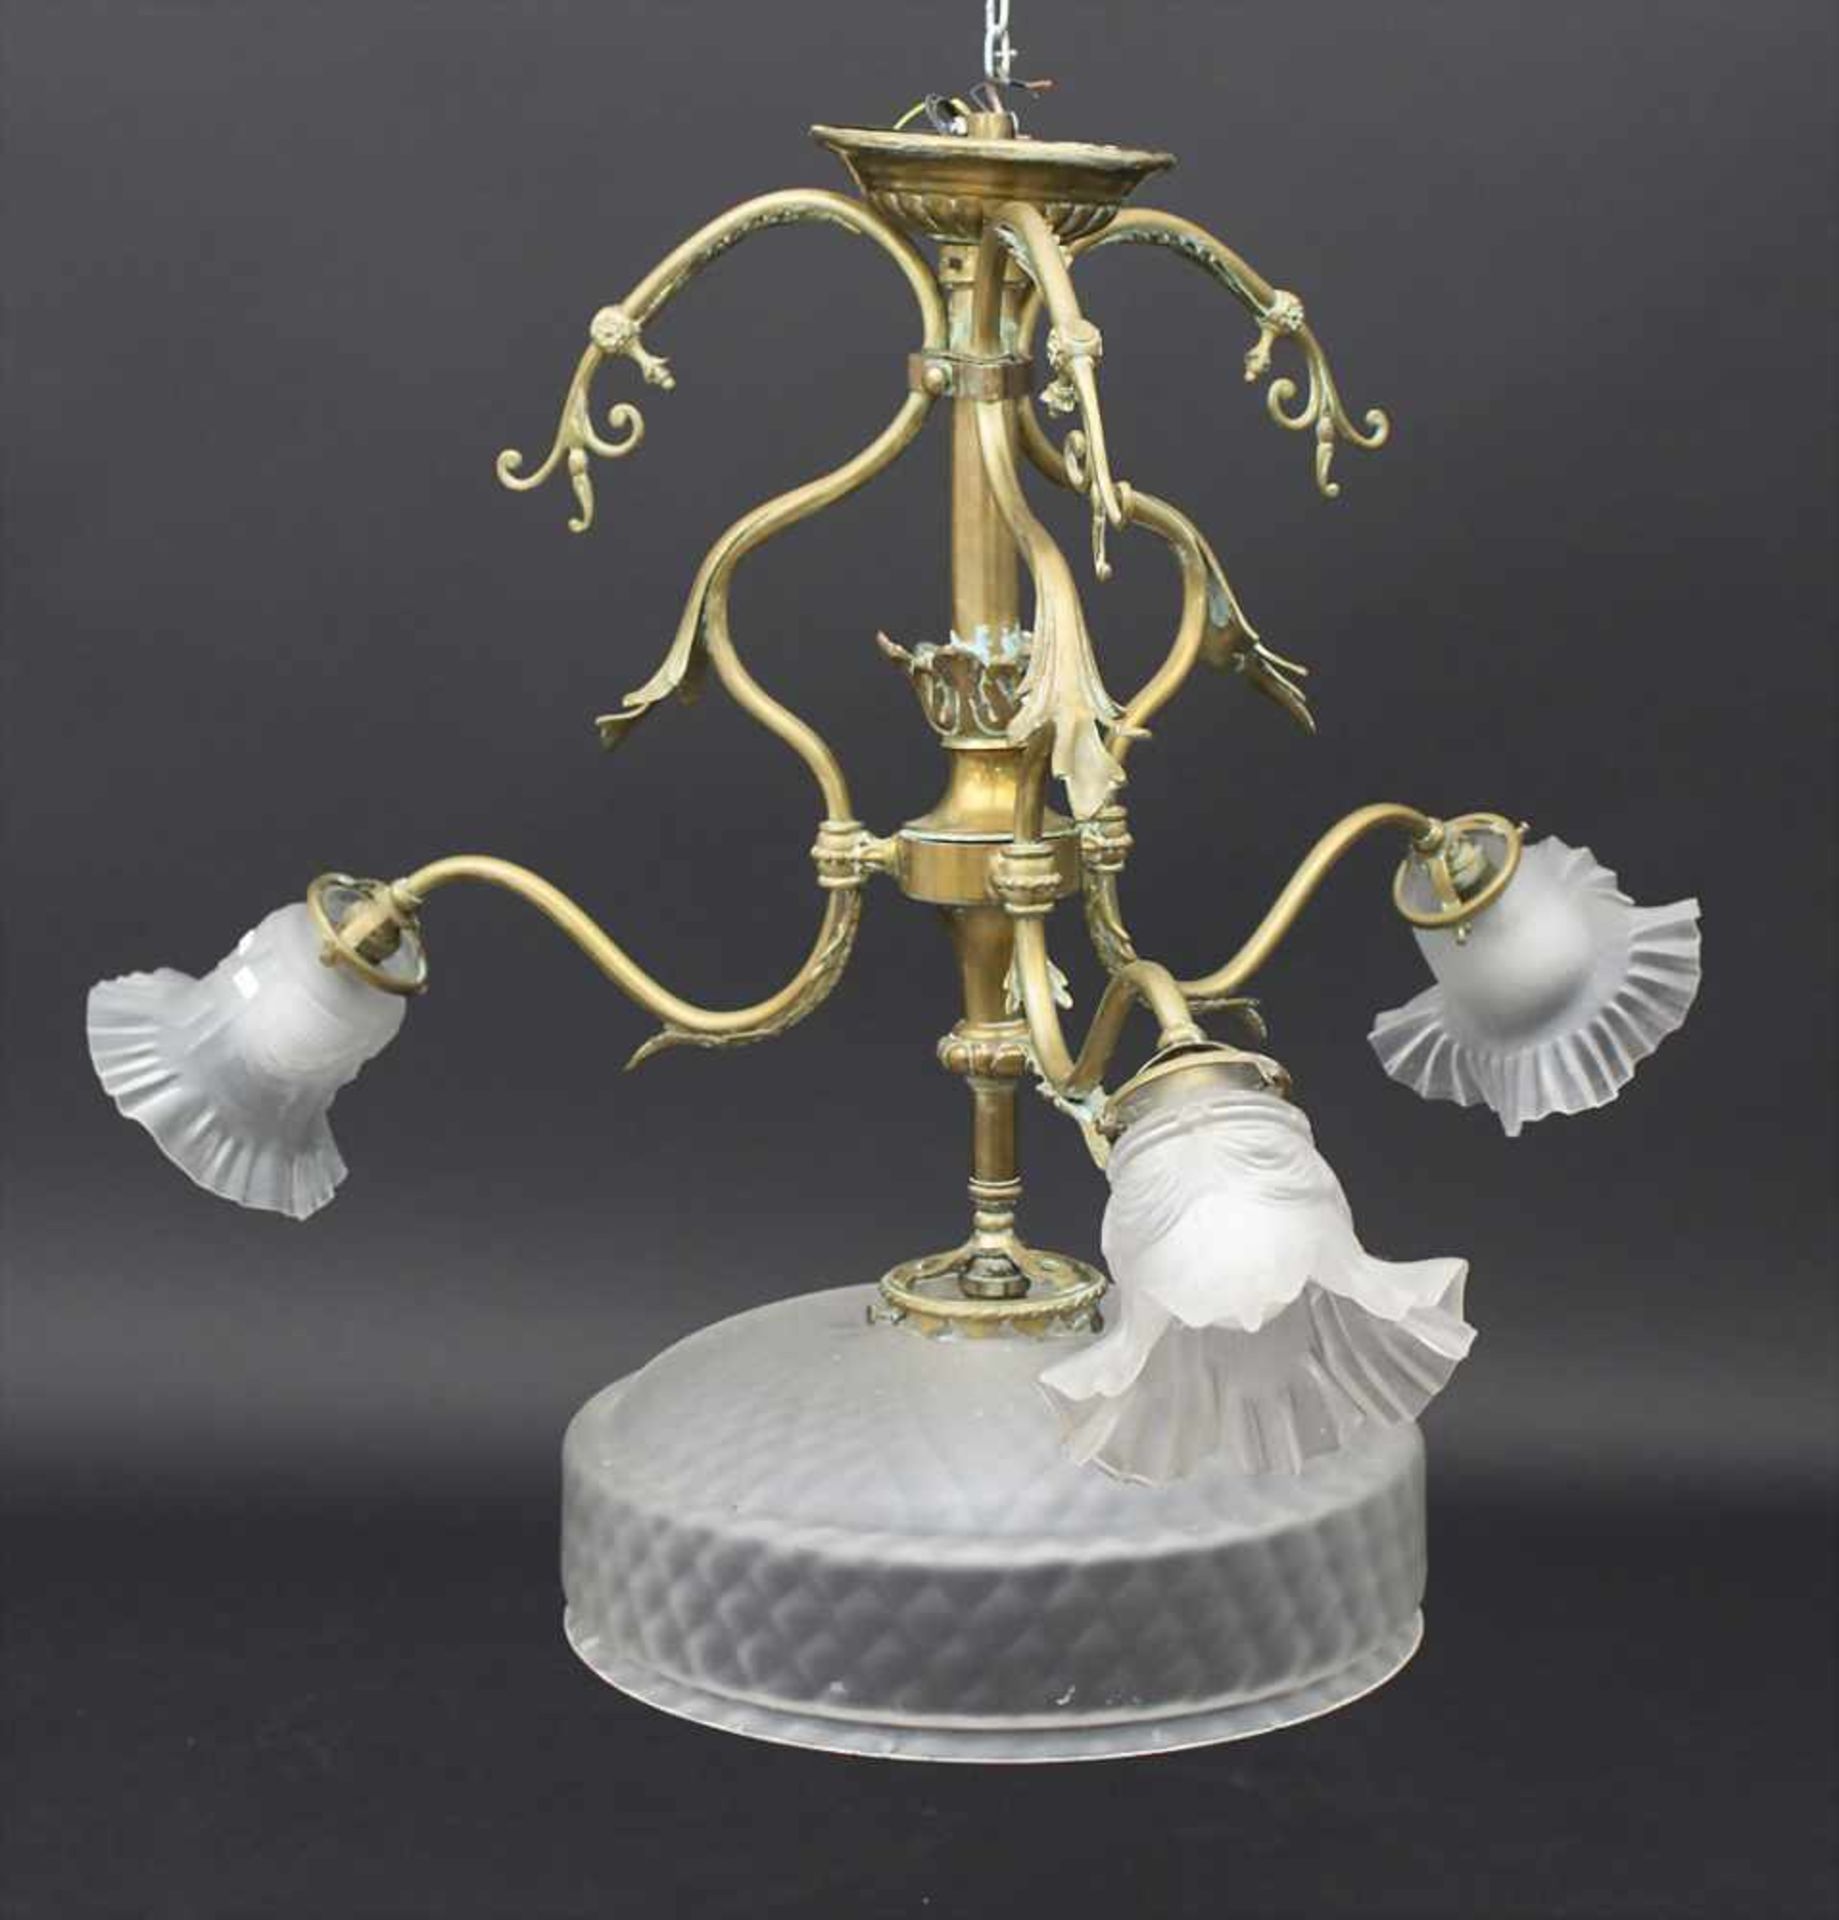 Deckenlampe / A ceiling lamp, um 1900Material: Bronze, satinierte Glasschirme, 4-lichtig, - Image 3 of 5